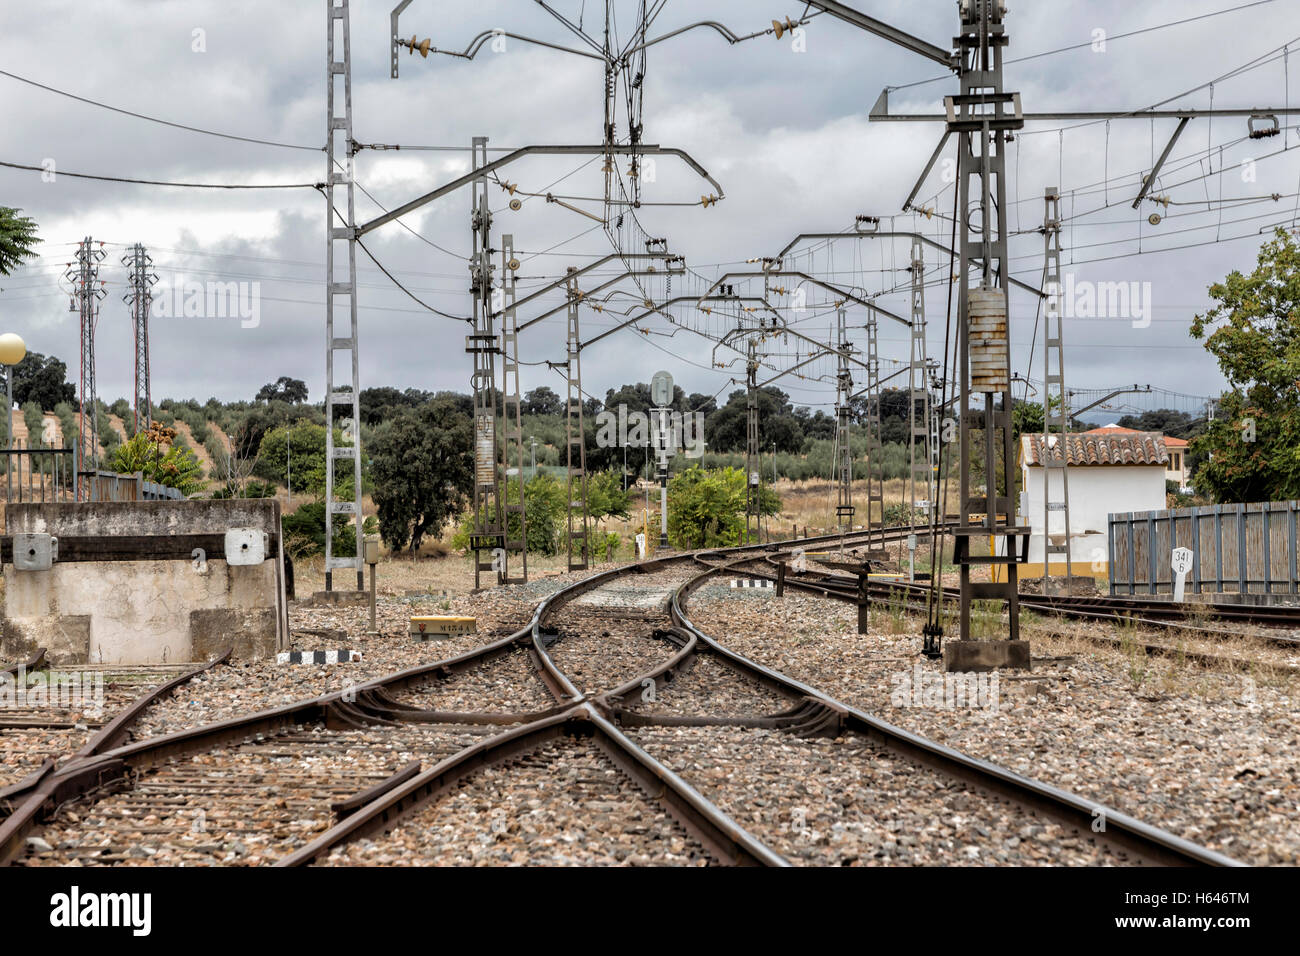 Espeluy railway platform and train tracks, Jaen province, Spain Stock Photo